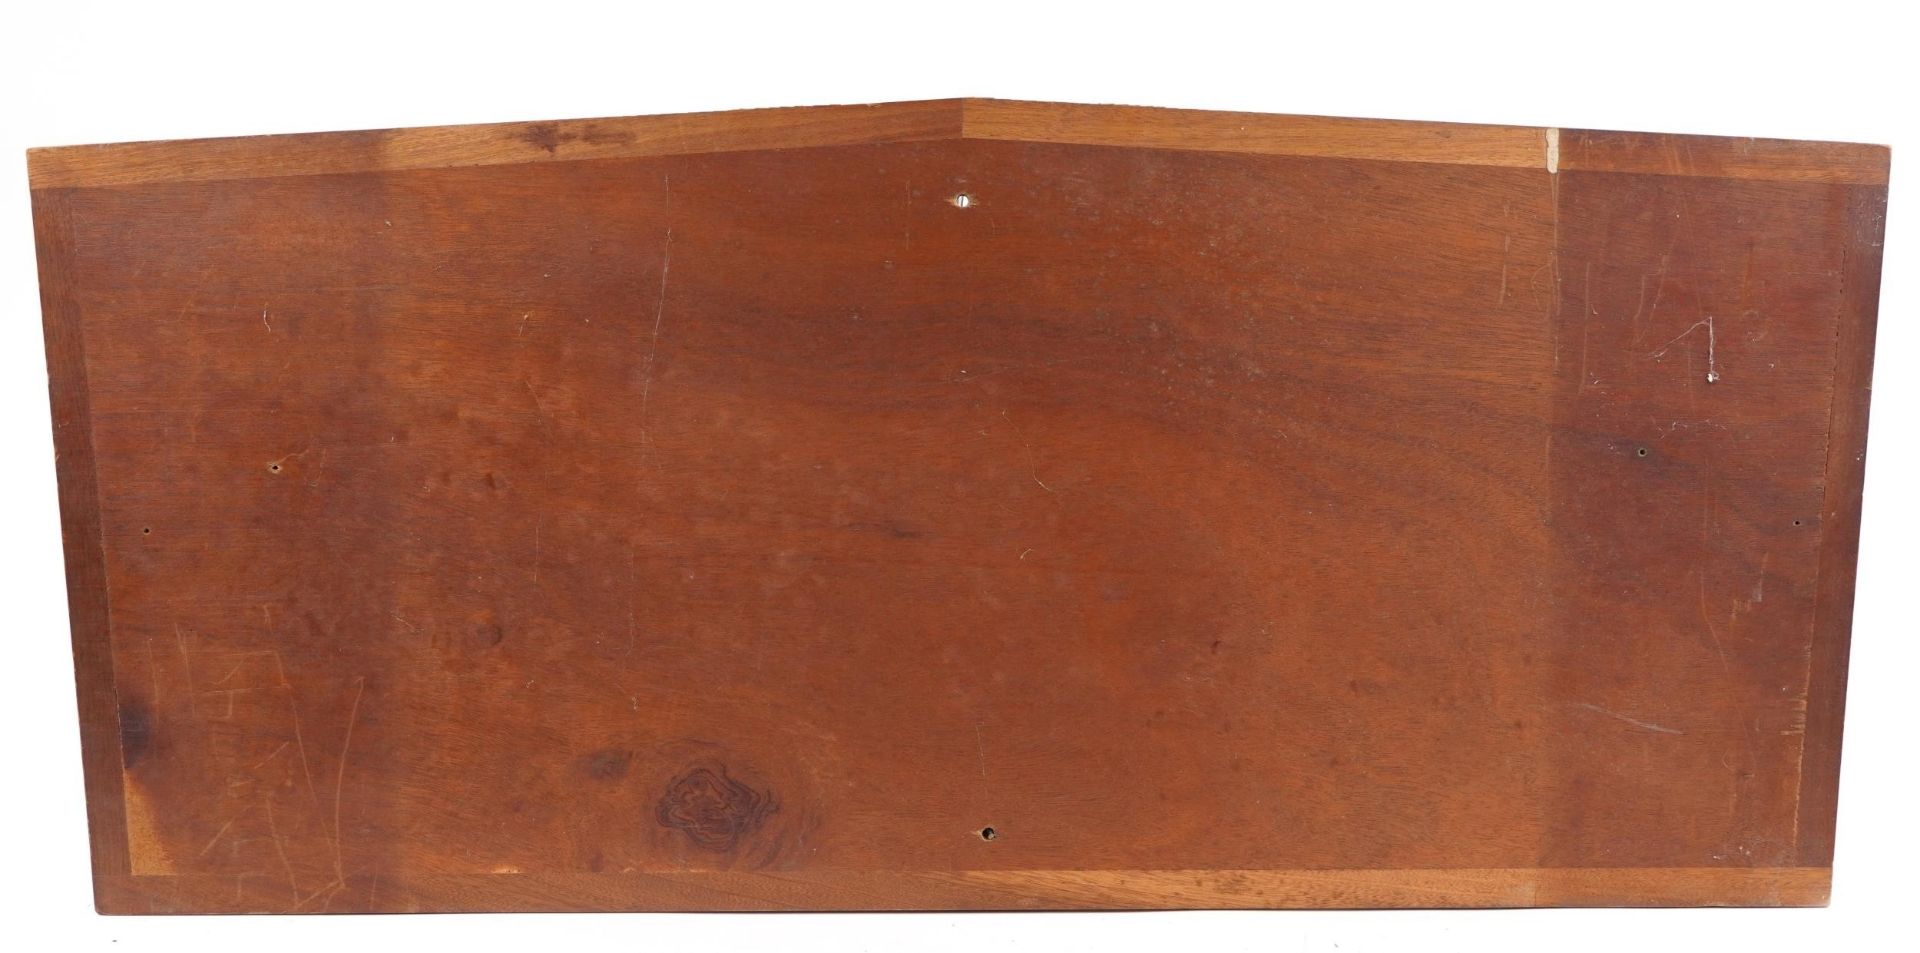 Mid 20th century mahogany snooker scoreboard with brass rails, 95cm x 43cm - Image 2 of 2